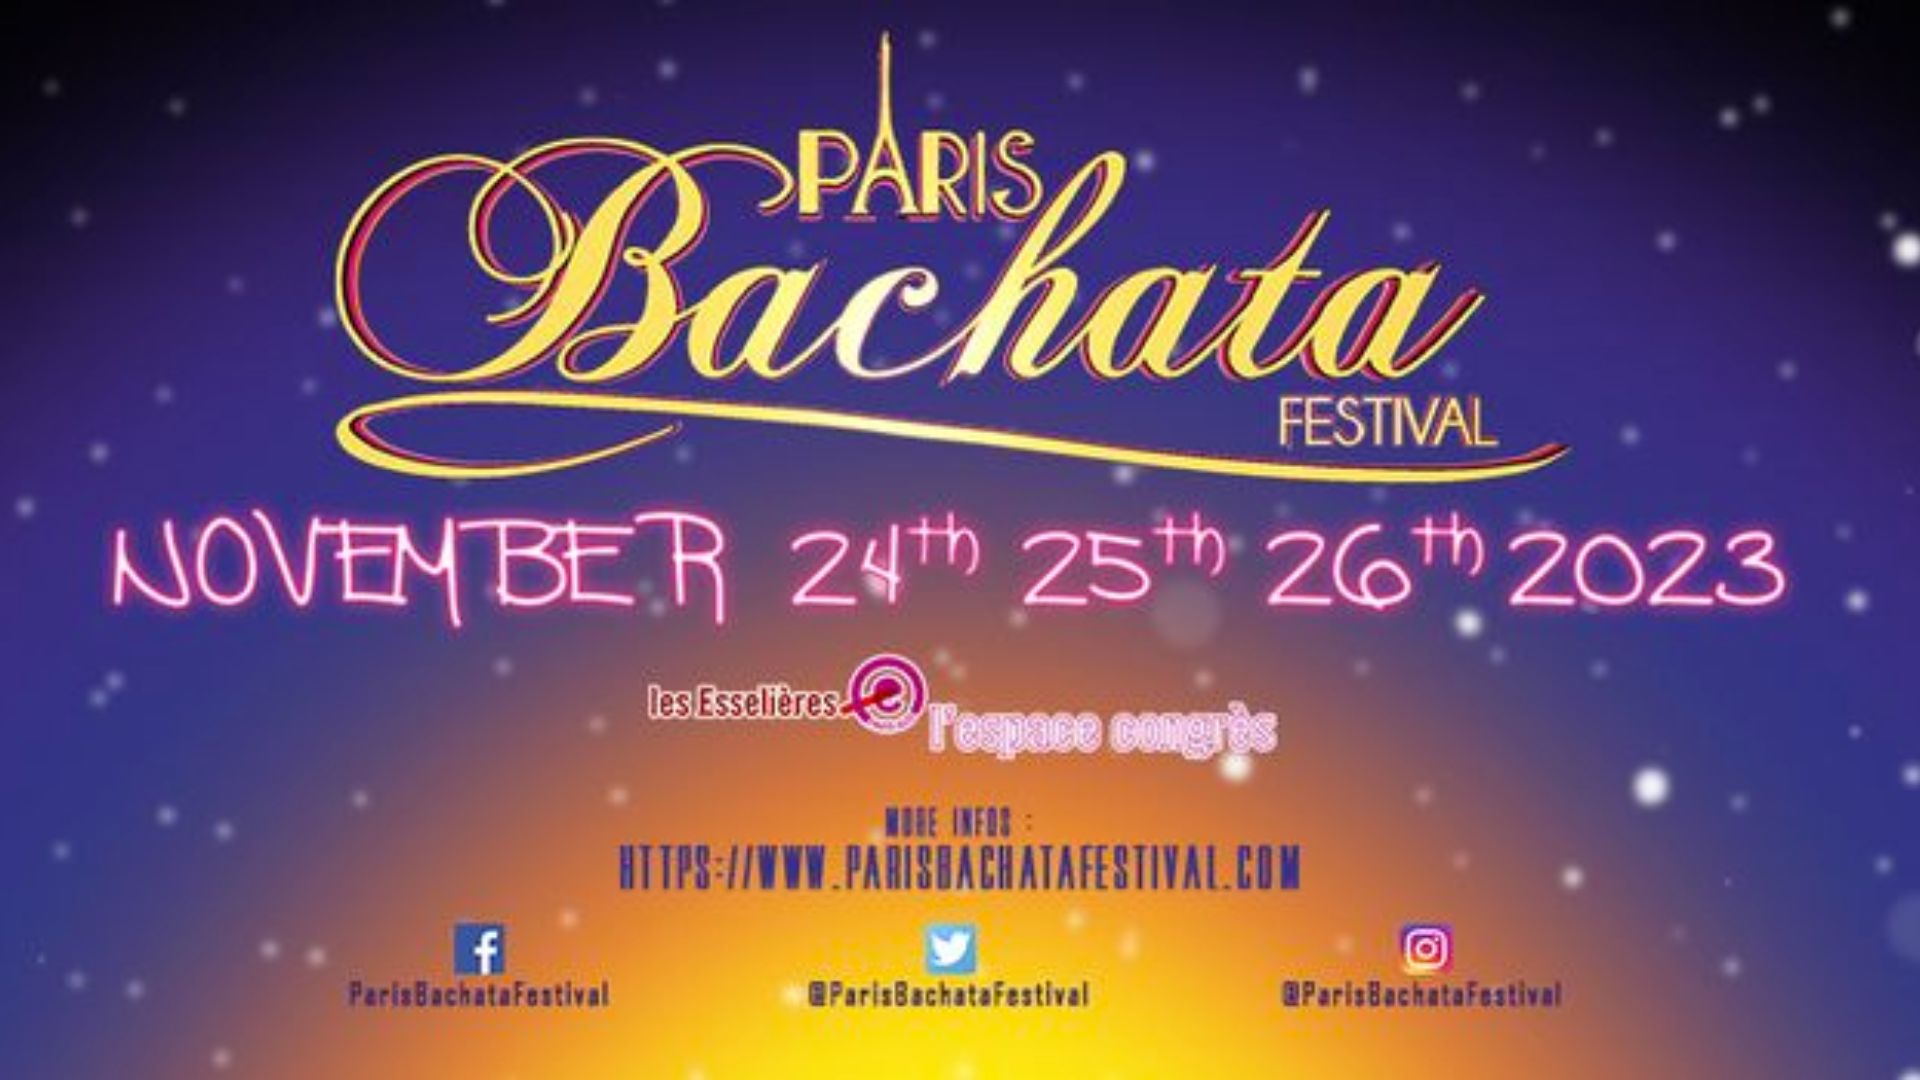 Paris Bachata Festival 2023 